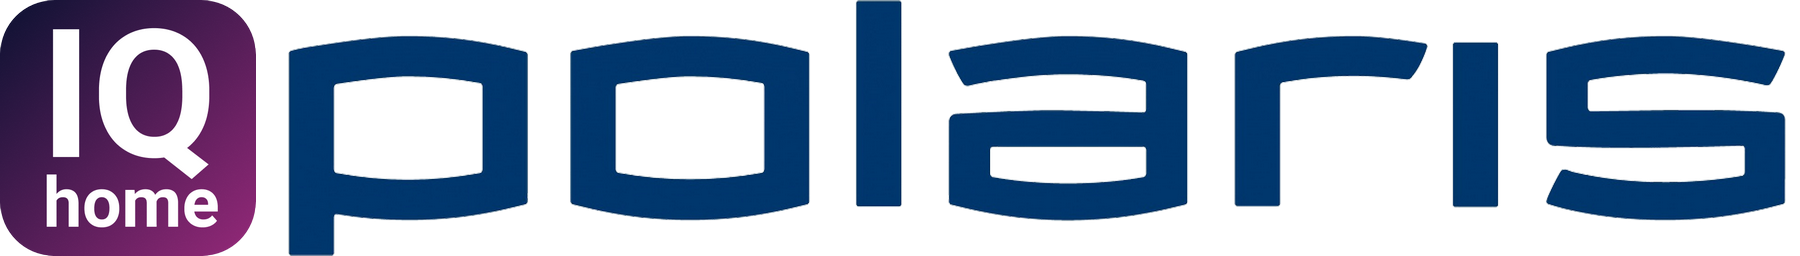 logo&icon.png